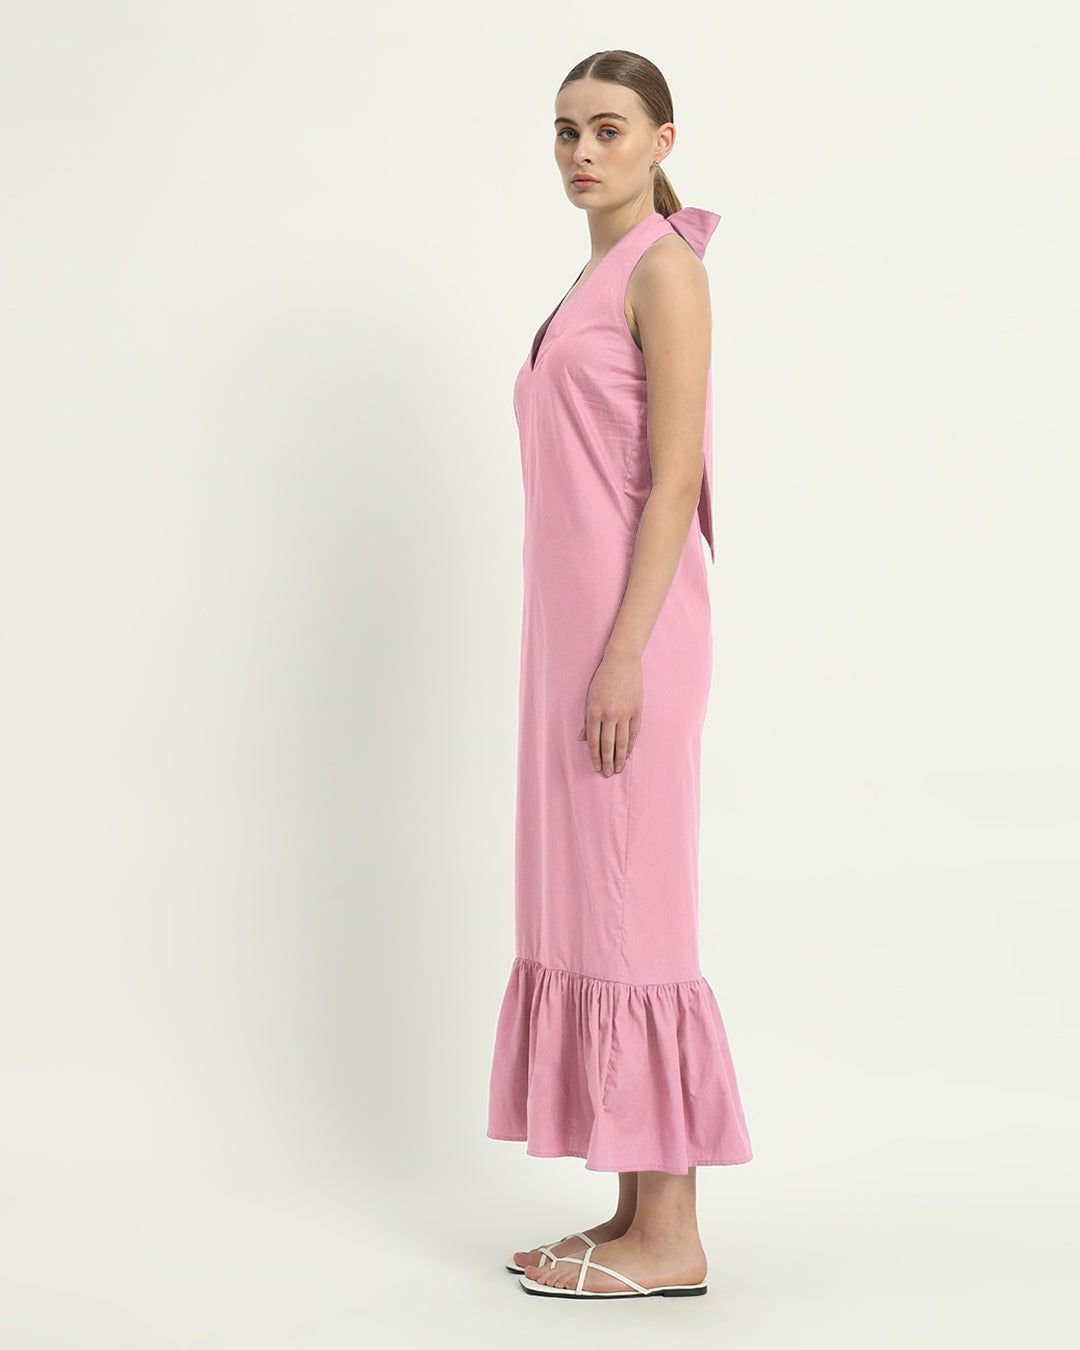 The Wellsville Fondant Pink Cotton Dress